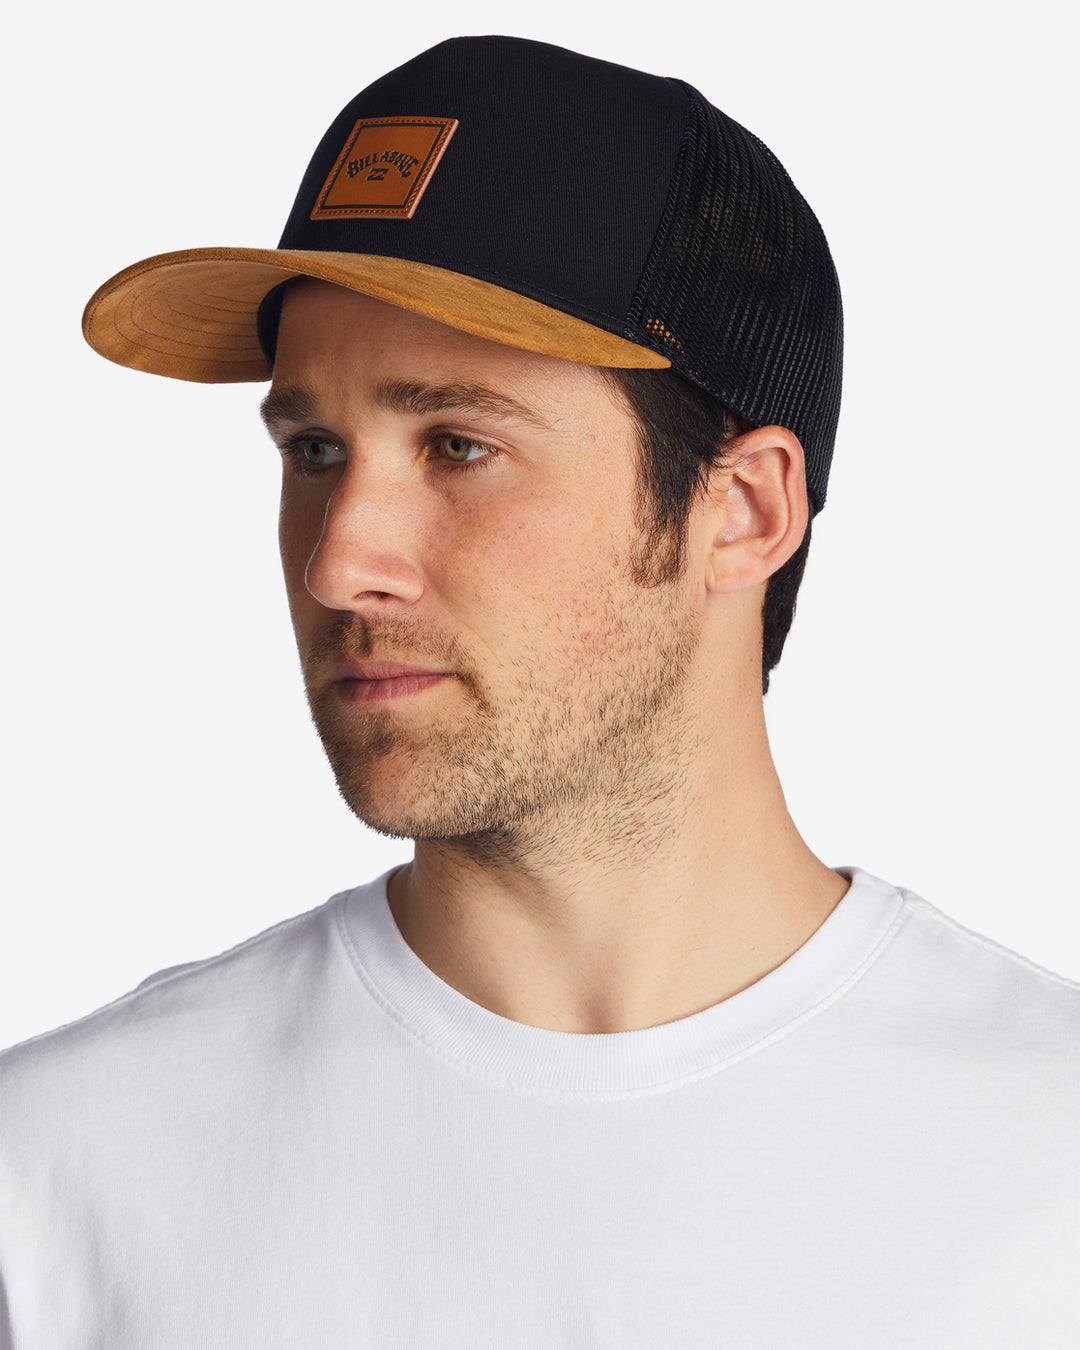 Billabong Stacked Trucker Hat - Black/Tan – Sun Diego Boardshop